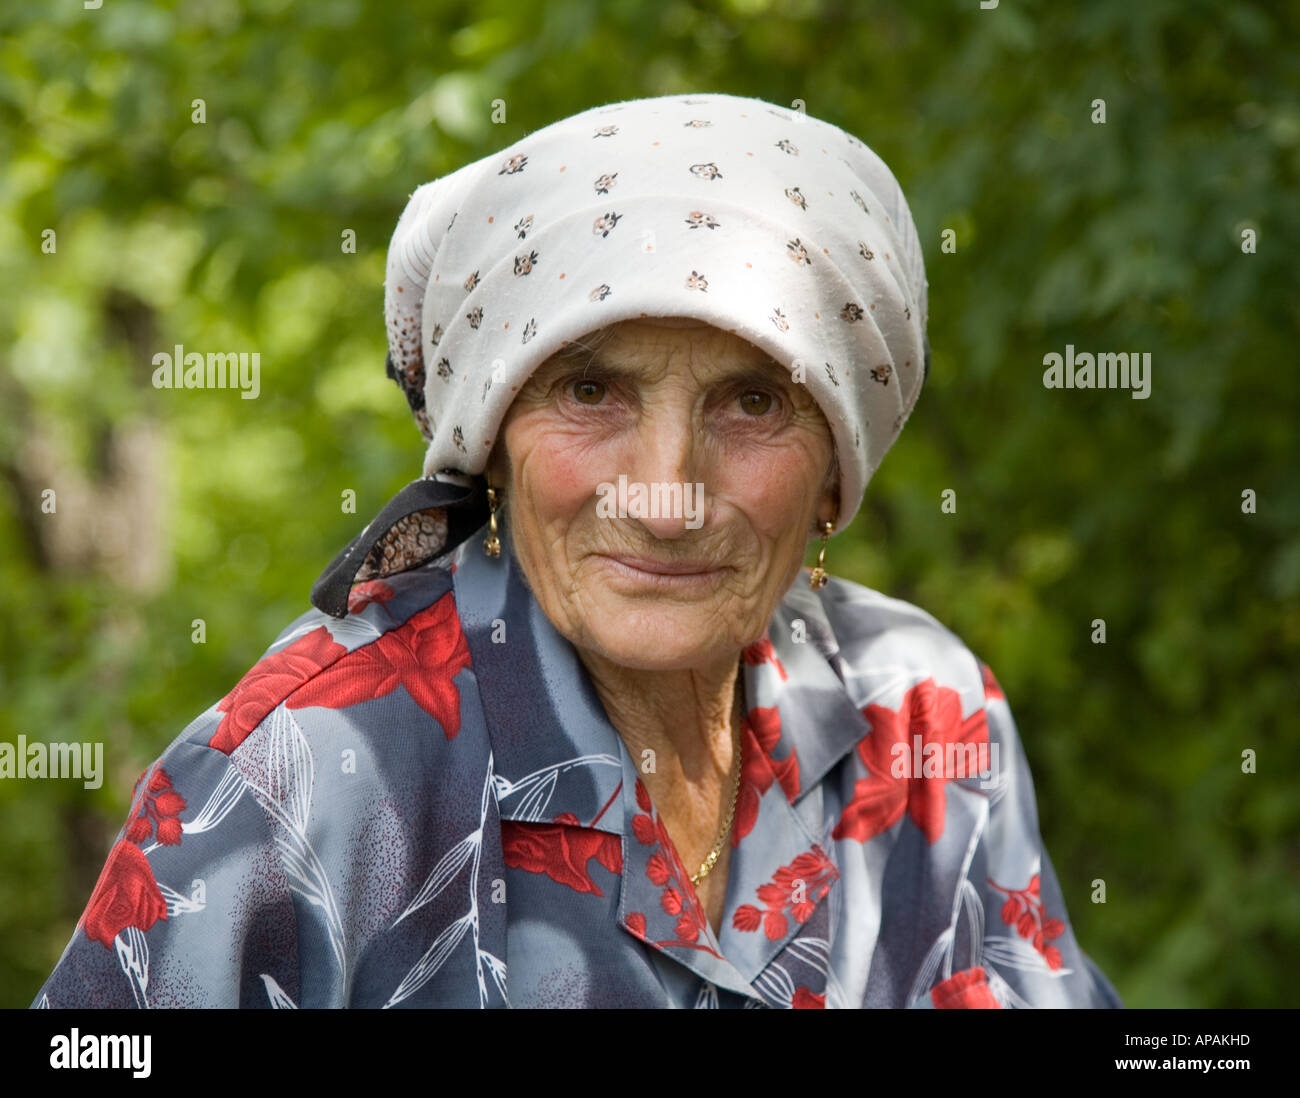 Old Lady With Donkey Sepina Italy Stock Photo